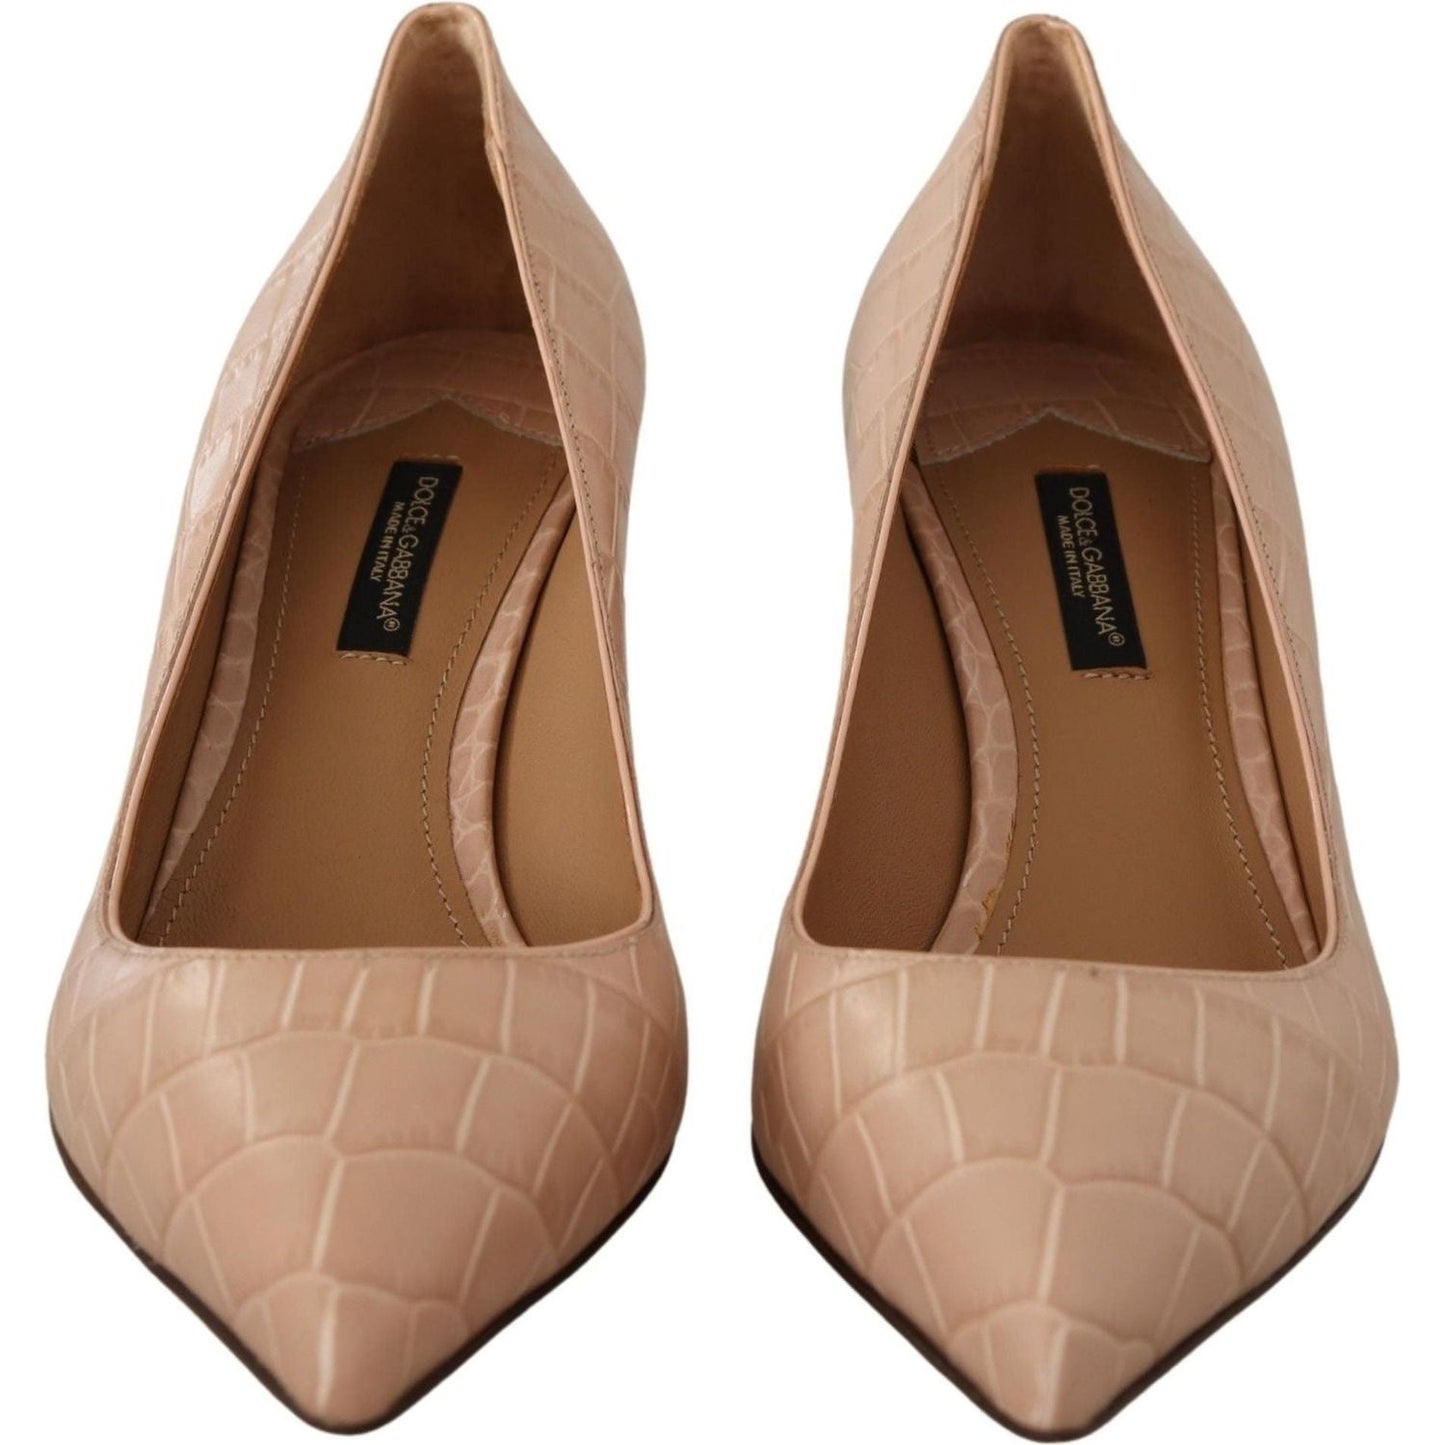 Dolce & Gabbana Elegant Beige Leather Pumps beige-leather-pointed-heels-pumps-shoes IMG_0725-2a0d01db-62d.jpg